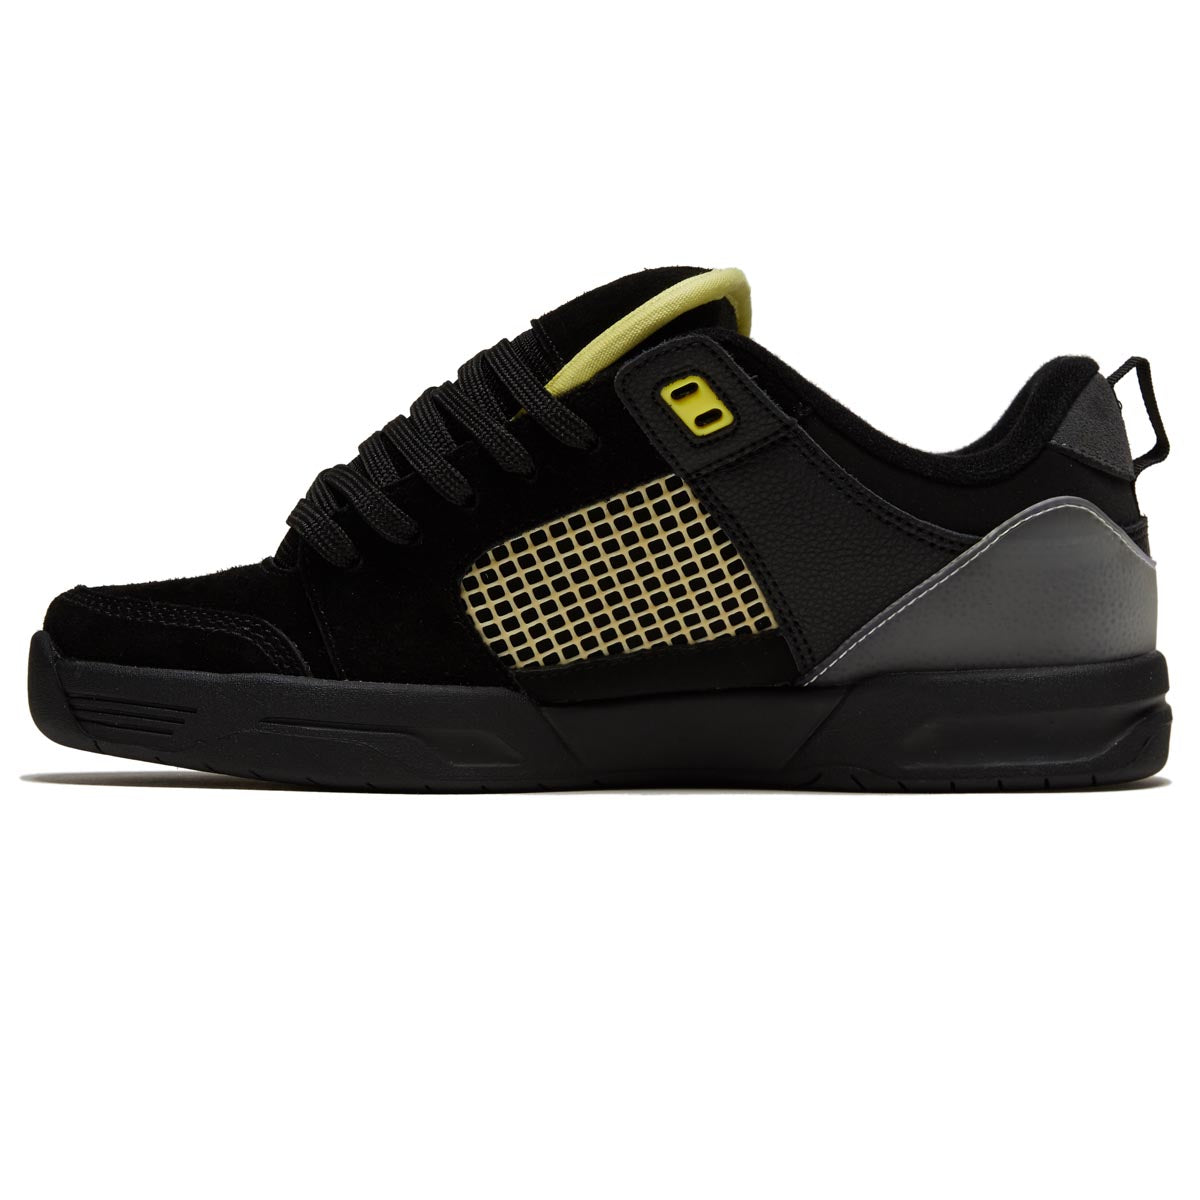 C1rca Tave TT Shoes - Black/Yellow image 2